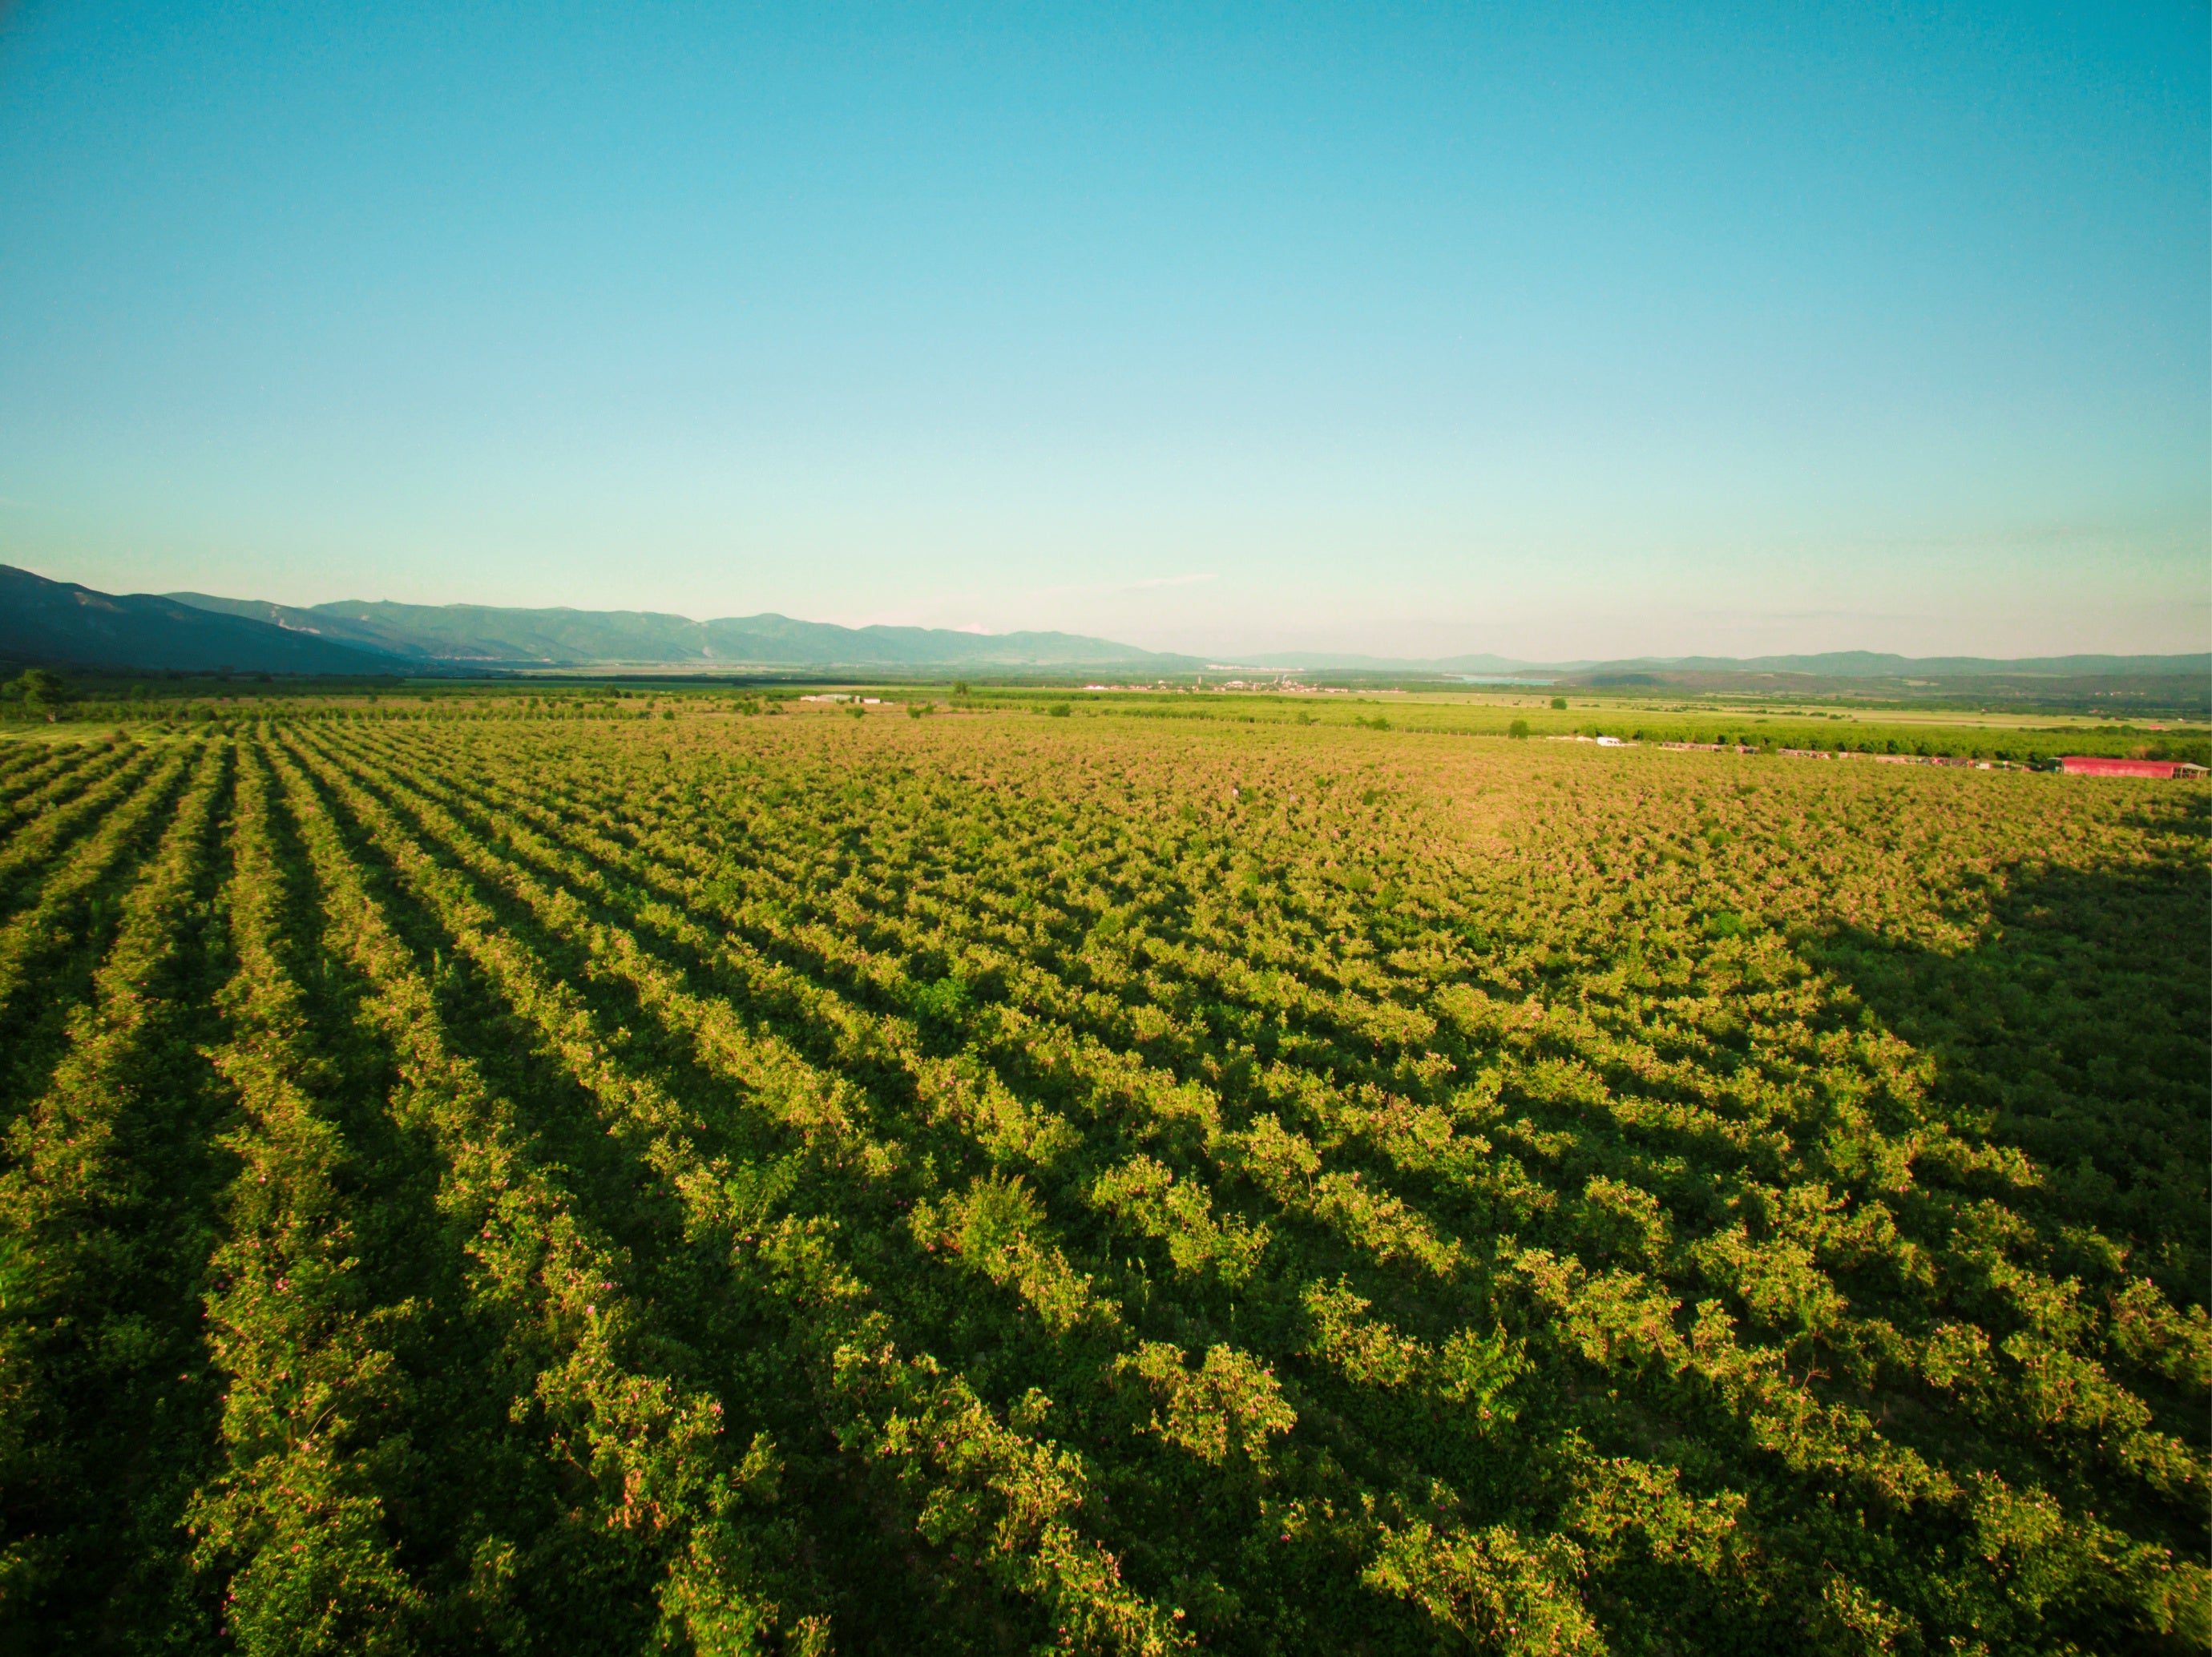 An aerial view of a vineyard field.